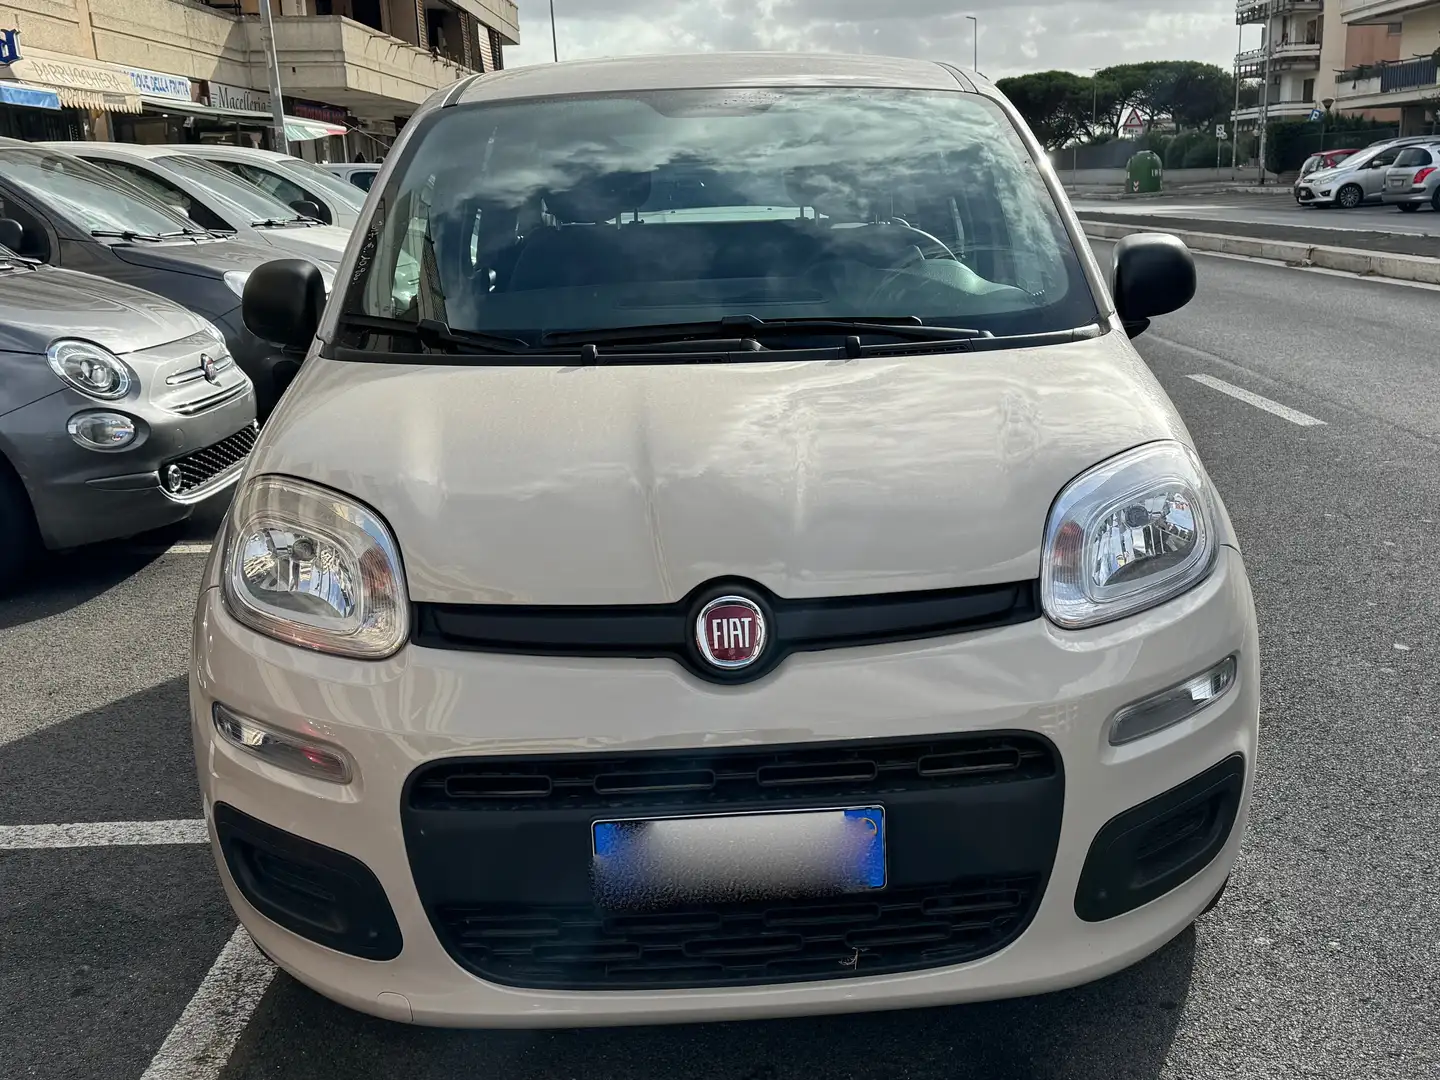 usato Fiat Panda Berlina a Roma - Rm per € 8.900,-